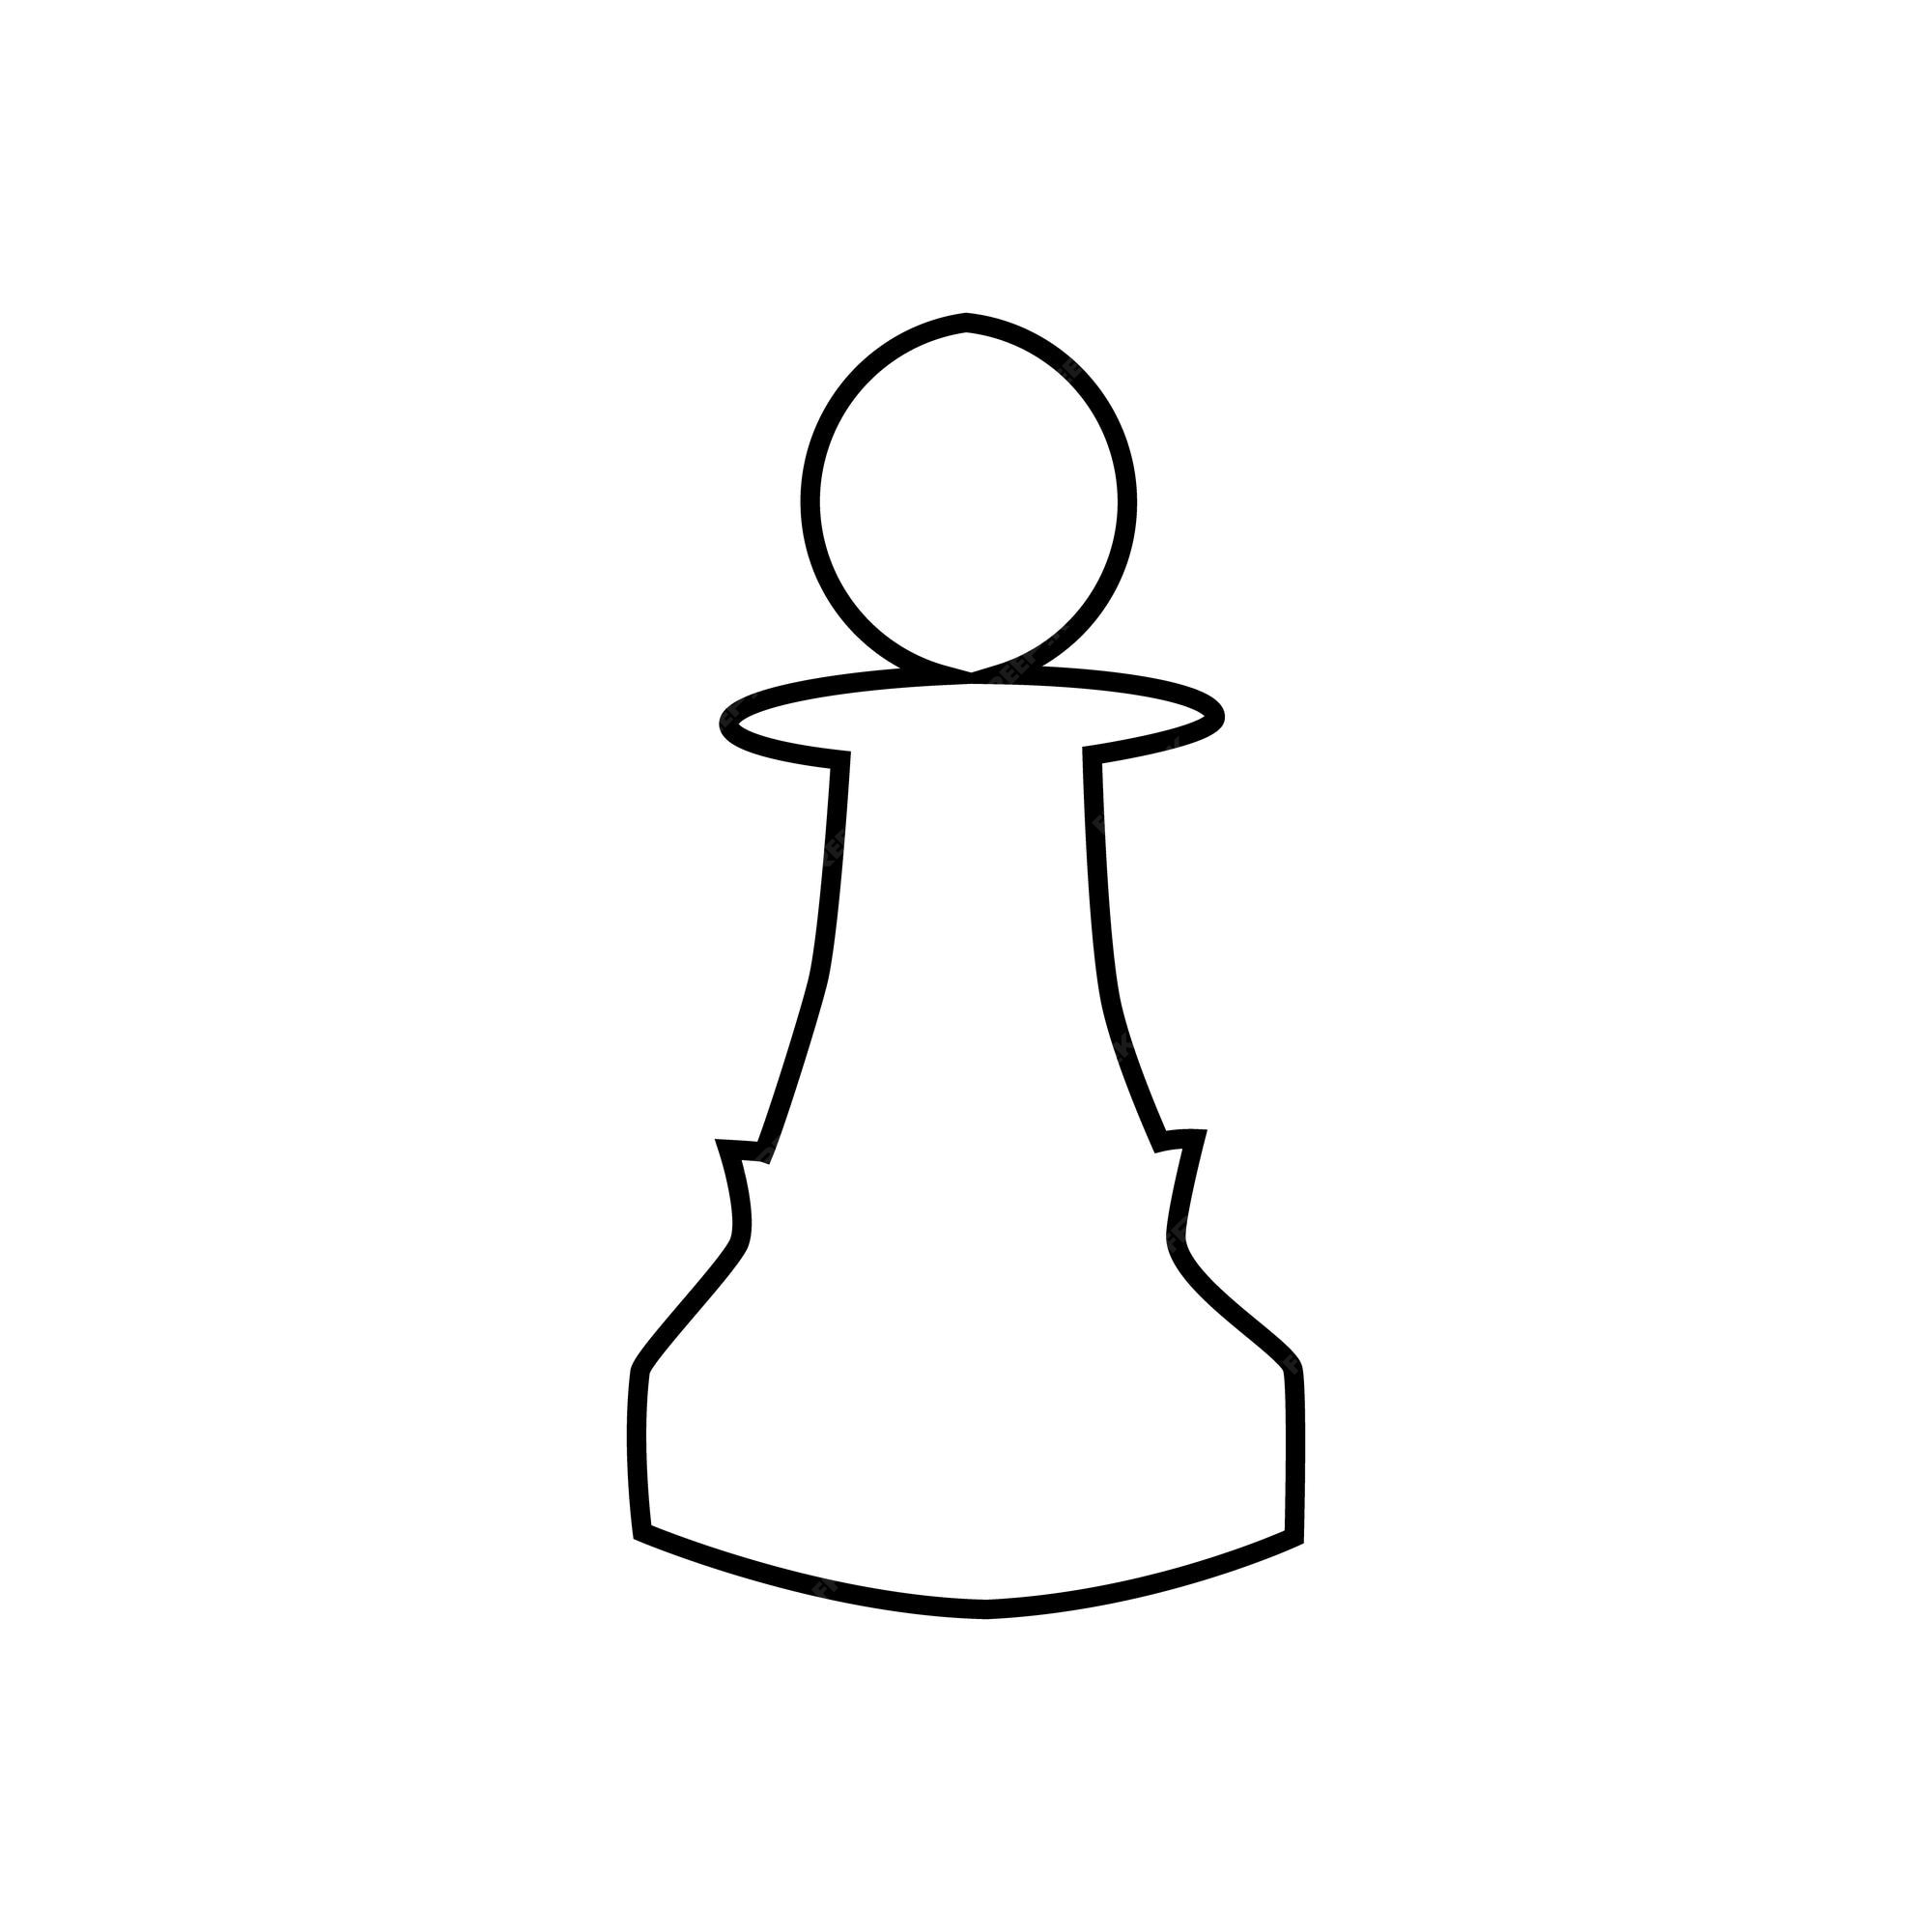 Delineou o símbolo de peão de xadrez